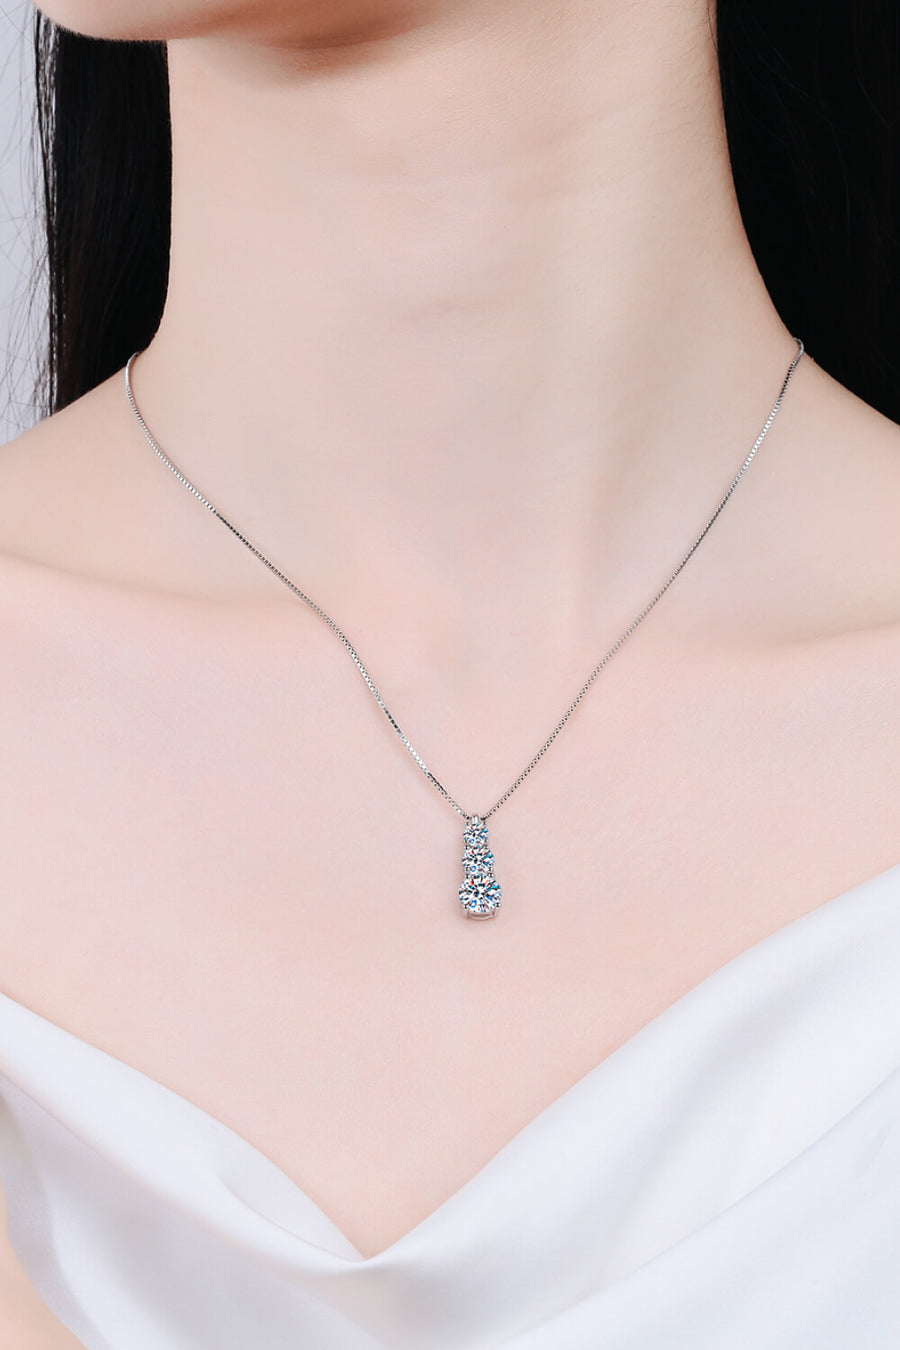 1# BEST Best Diamond Necklace Jewelry Gifts for Women | #1 Best Most Top Trendy Trending 1.8 Carat Diamond Triple-Pendant Necklace Gift for Women, Ladies | MASON New York